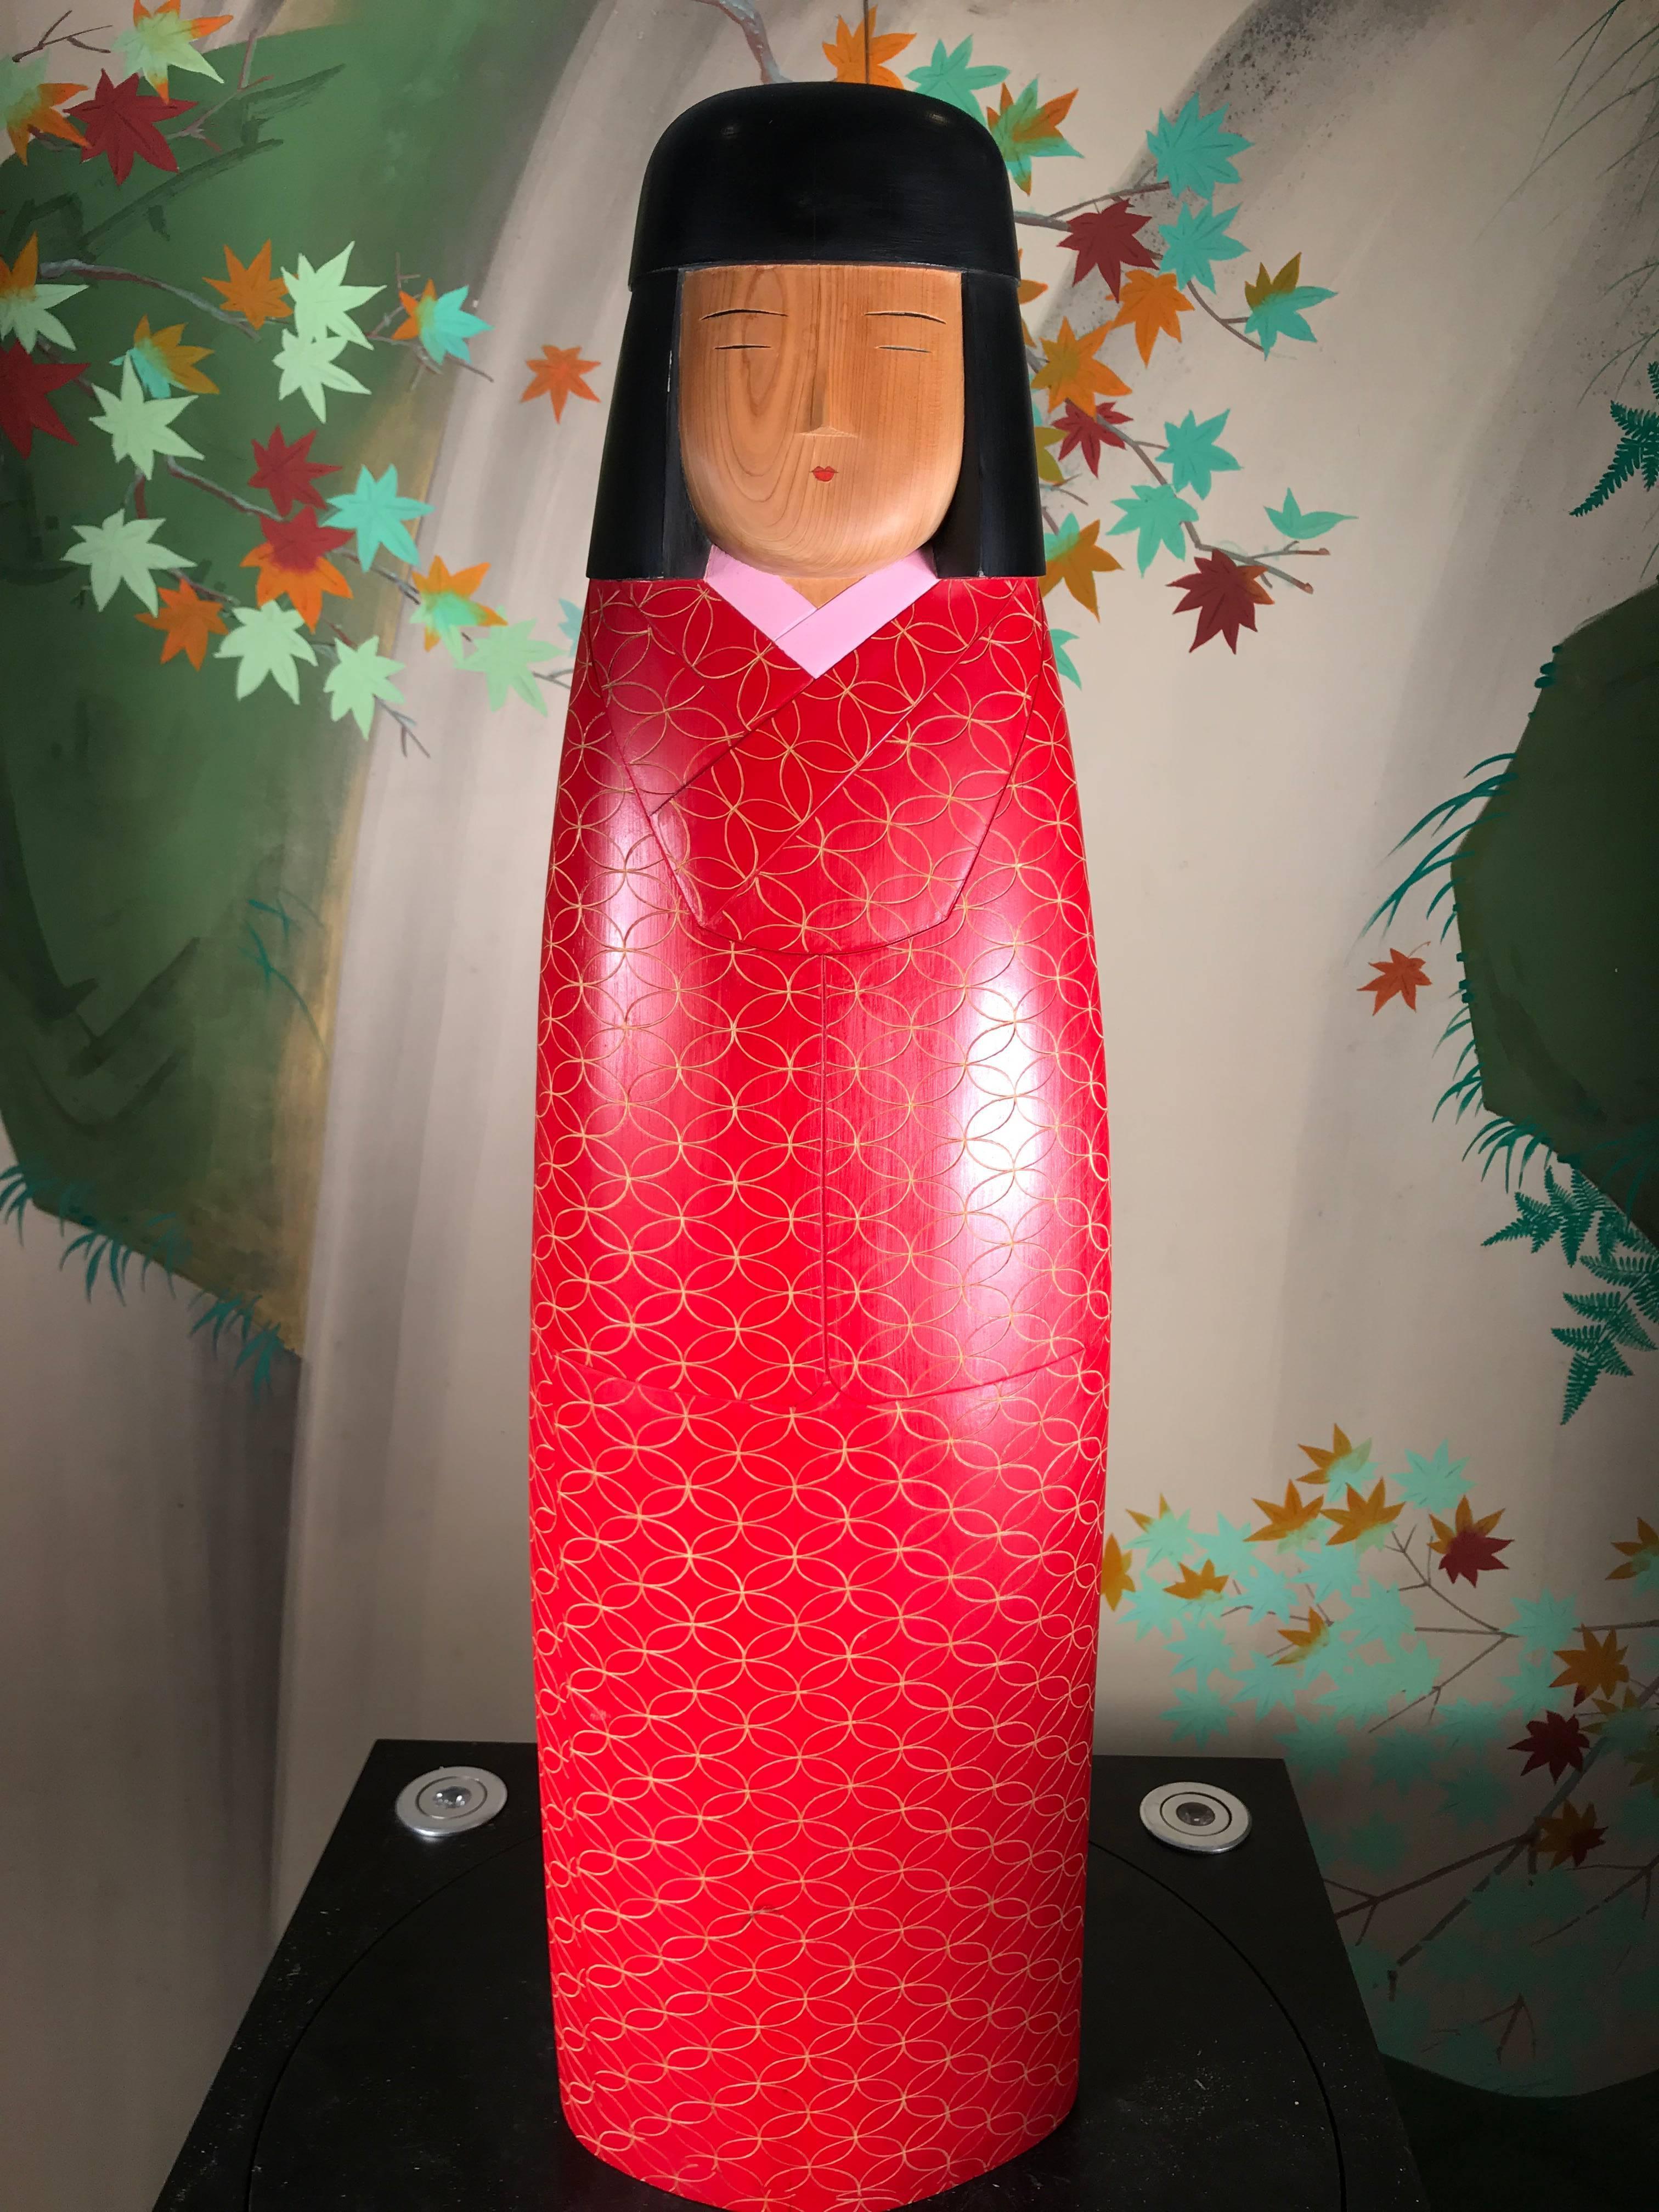 Showa Japan Extraordinary Hand-Carved Kokeshi Doll a Masterpiece Art Form